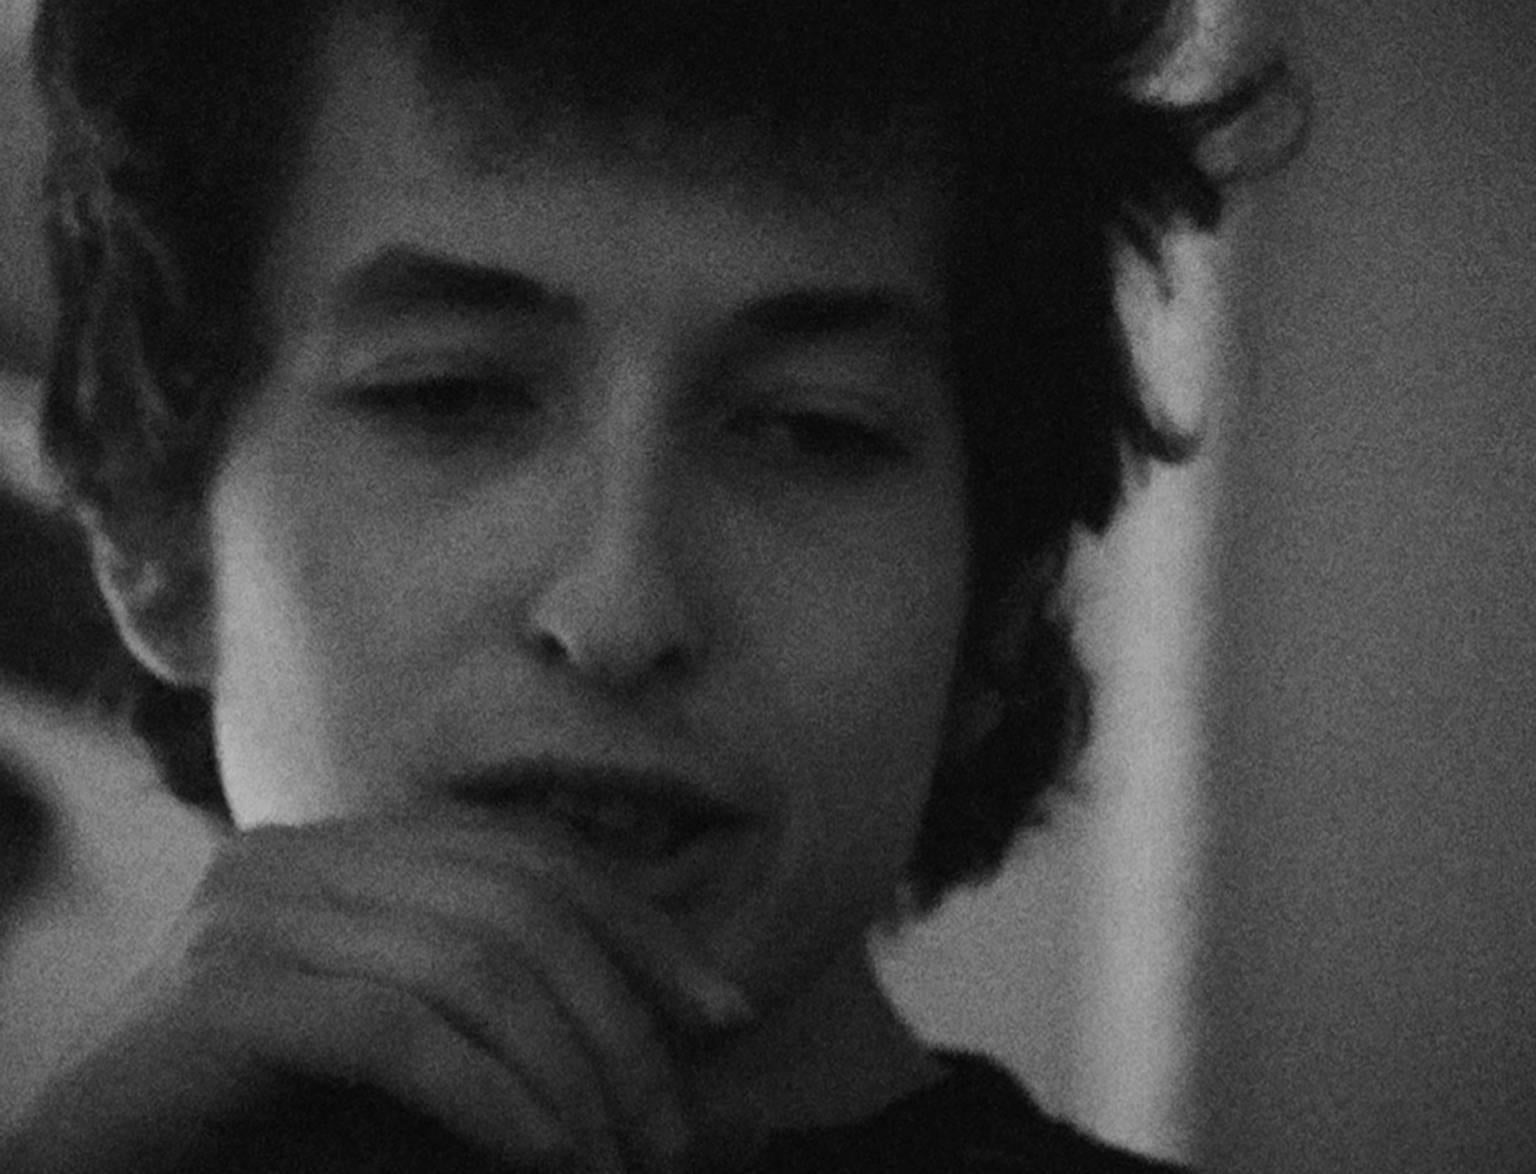 Bob Dylan backstage at Royal Albert Hall, London 1965 - Mixed Media Art by D.A. Pennebaker